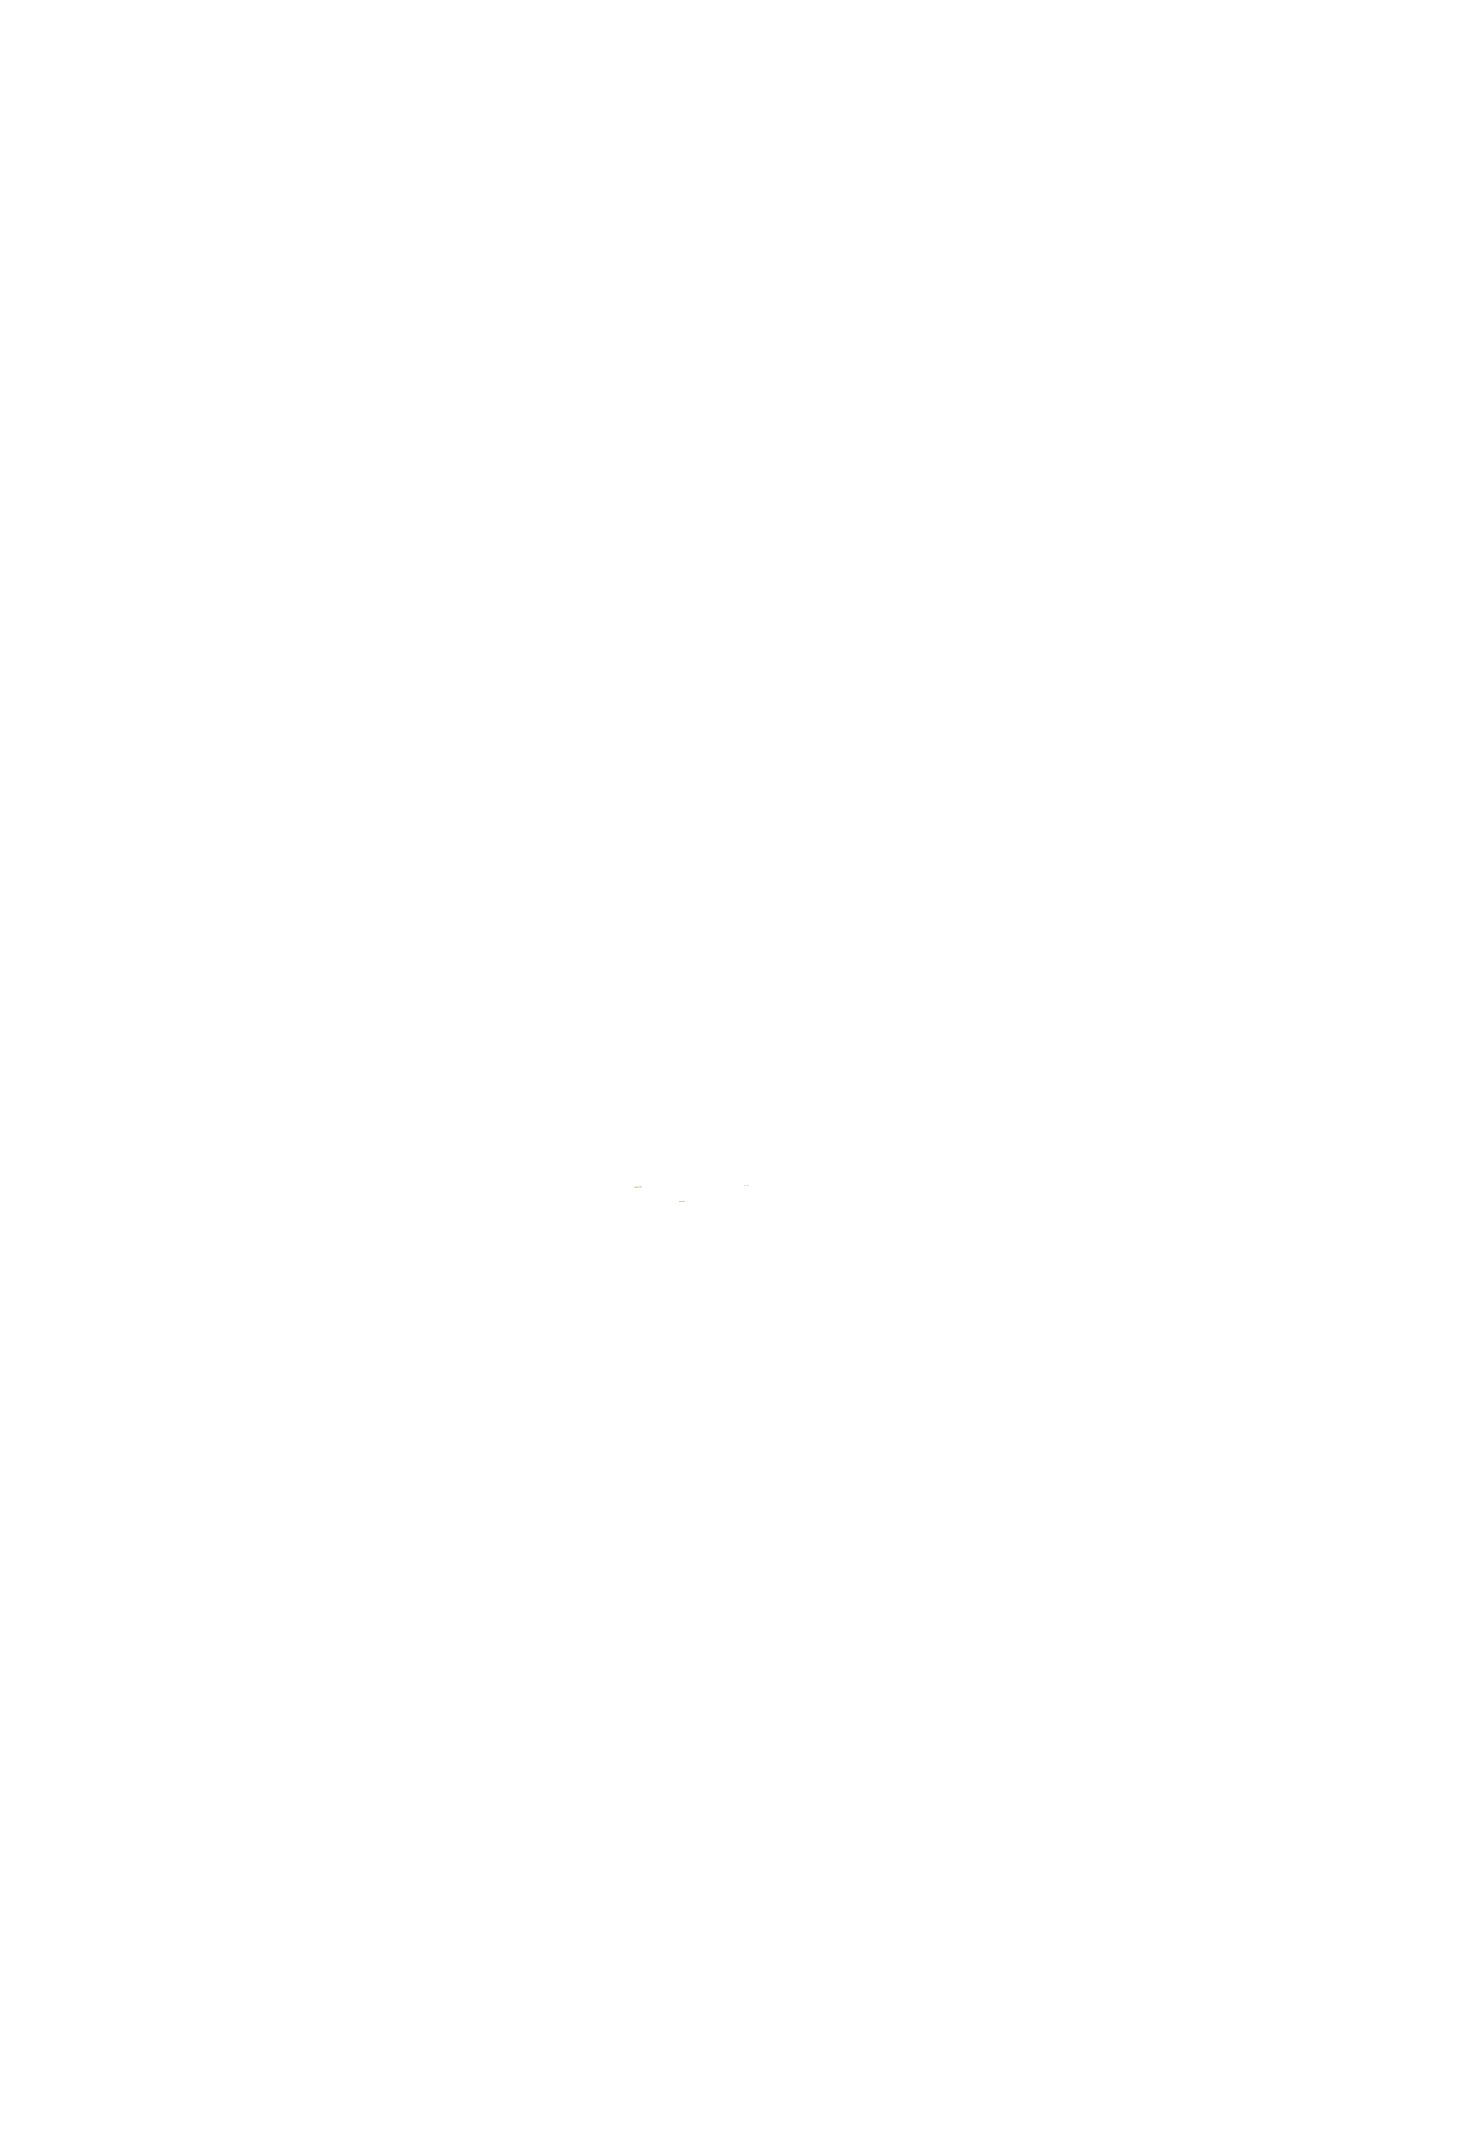 Logo illustration of Beverly Hills Street sign of Via Rodeo